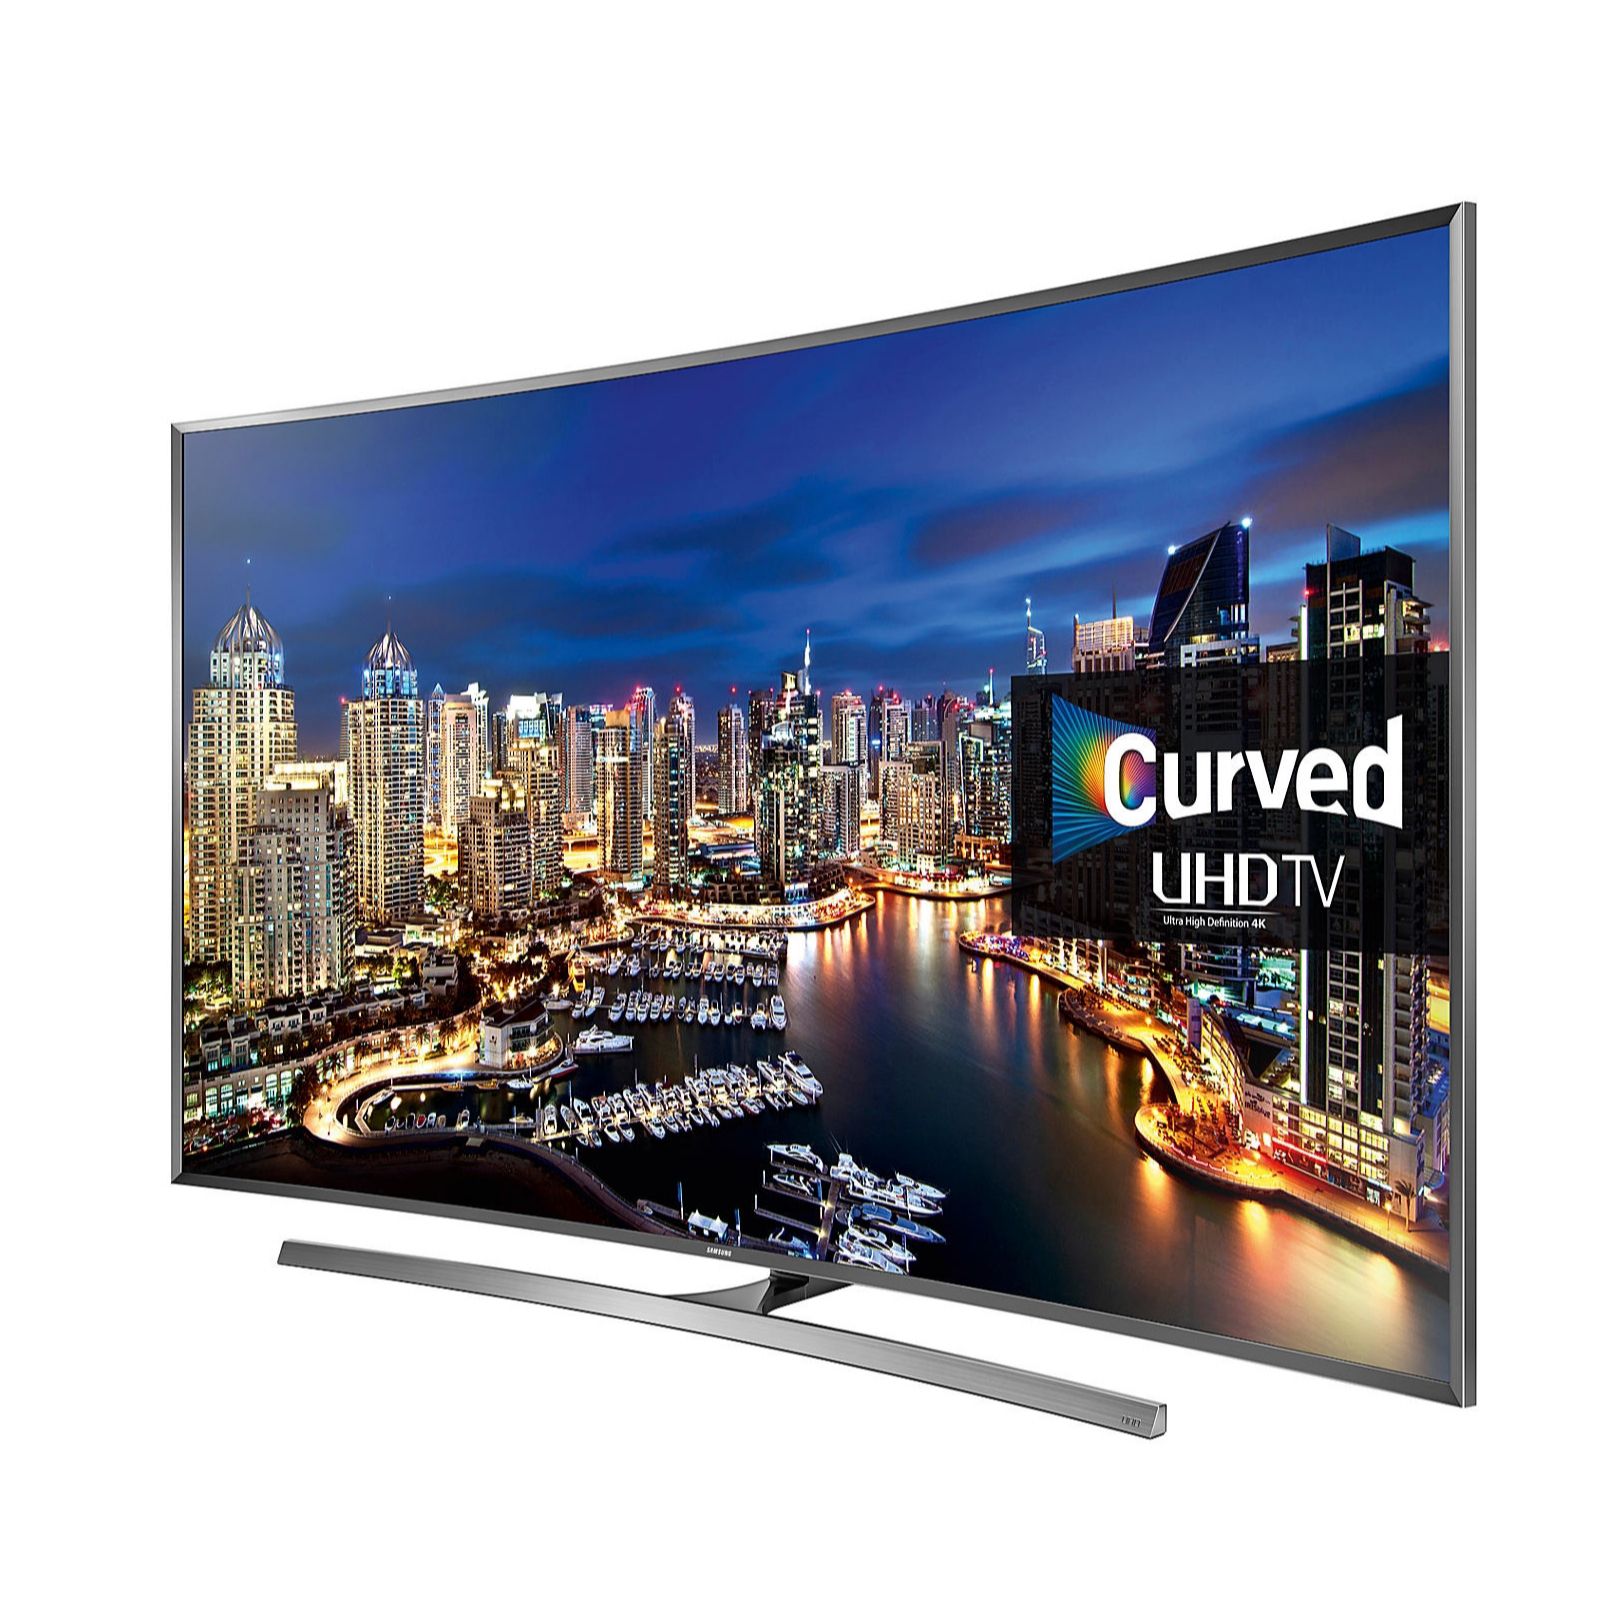 Samsung JU6500 6 Series 65"  Curved UHD Smart LED TV